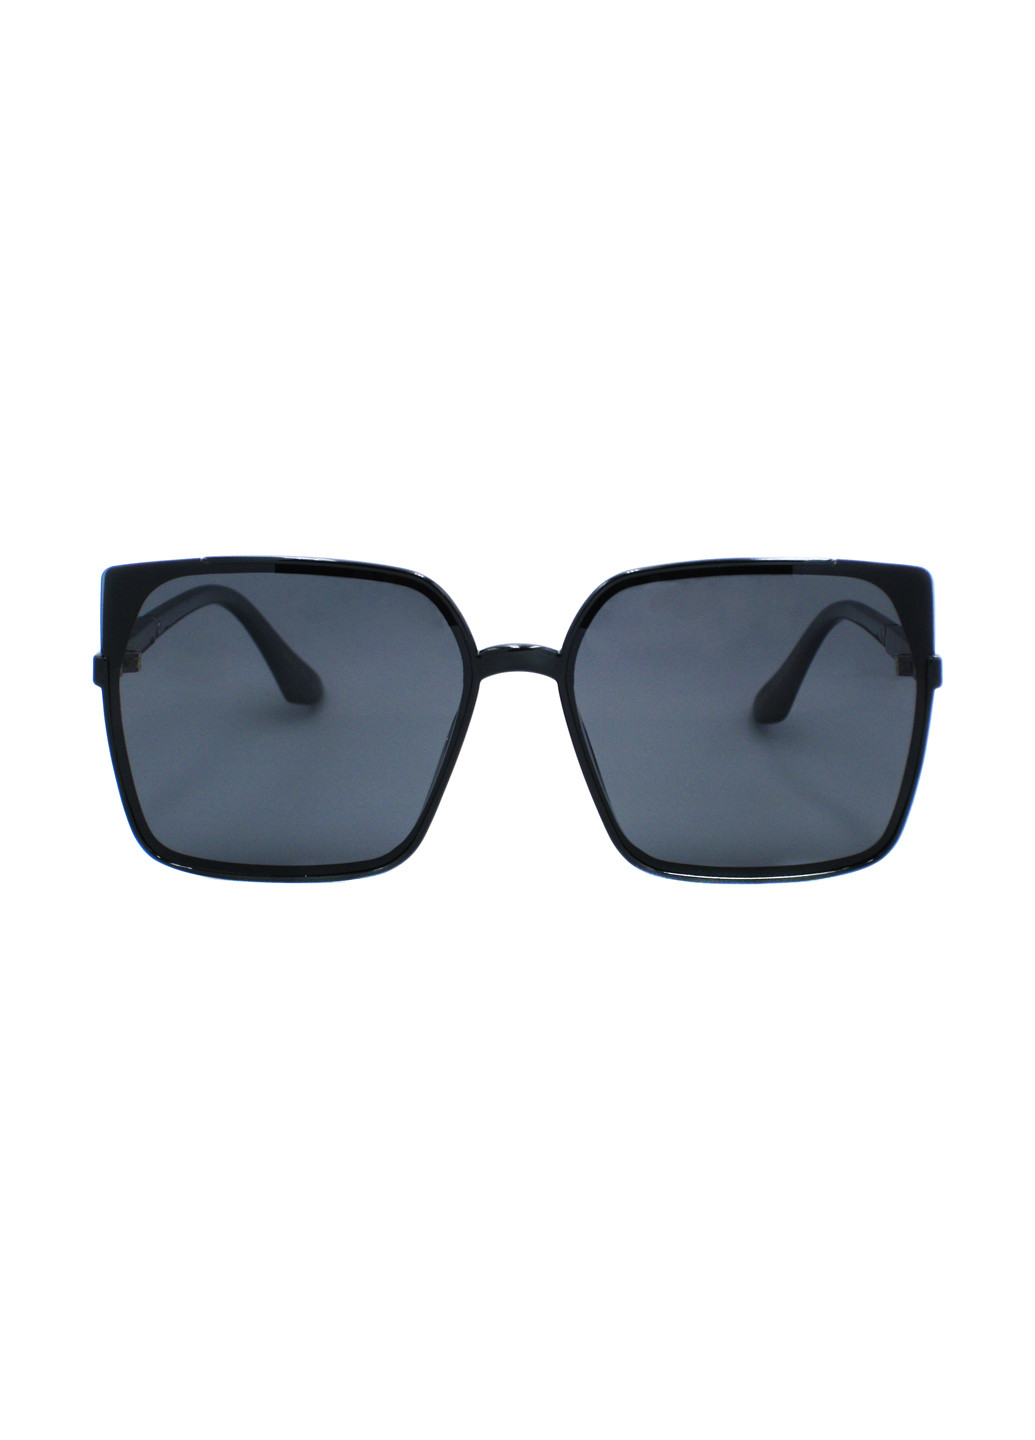 Cолнцезащитные очки Boccaccio bcp9961 01 (188291433)